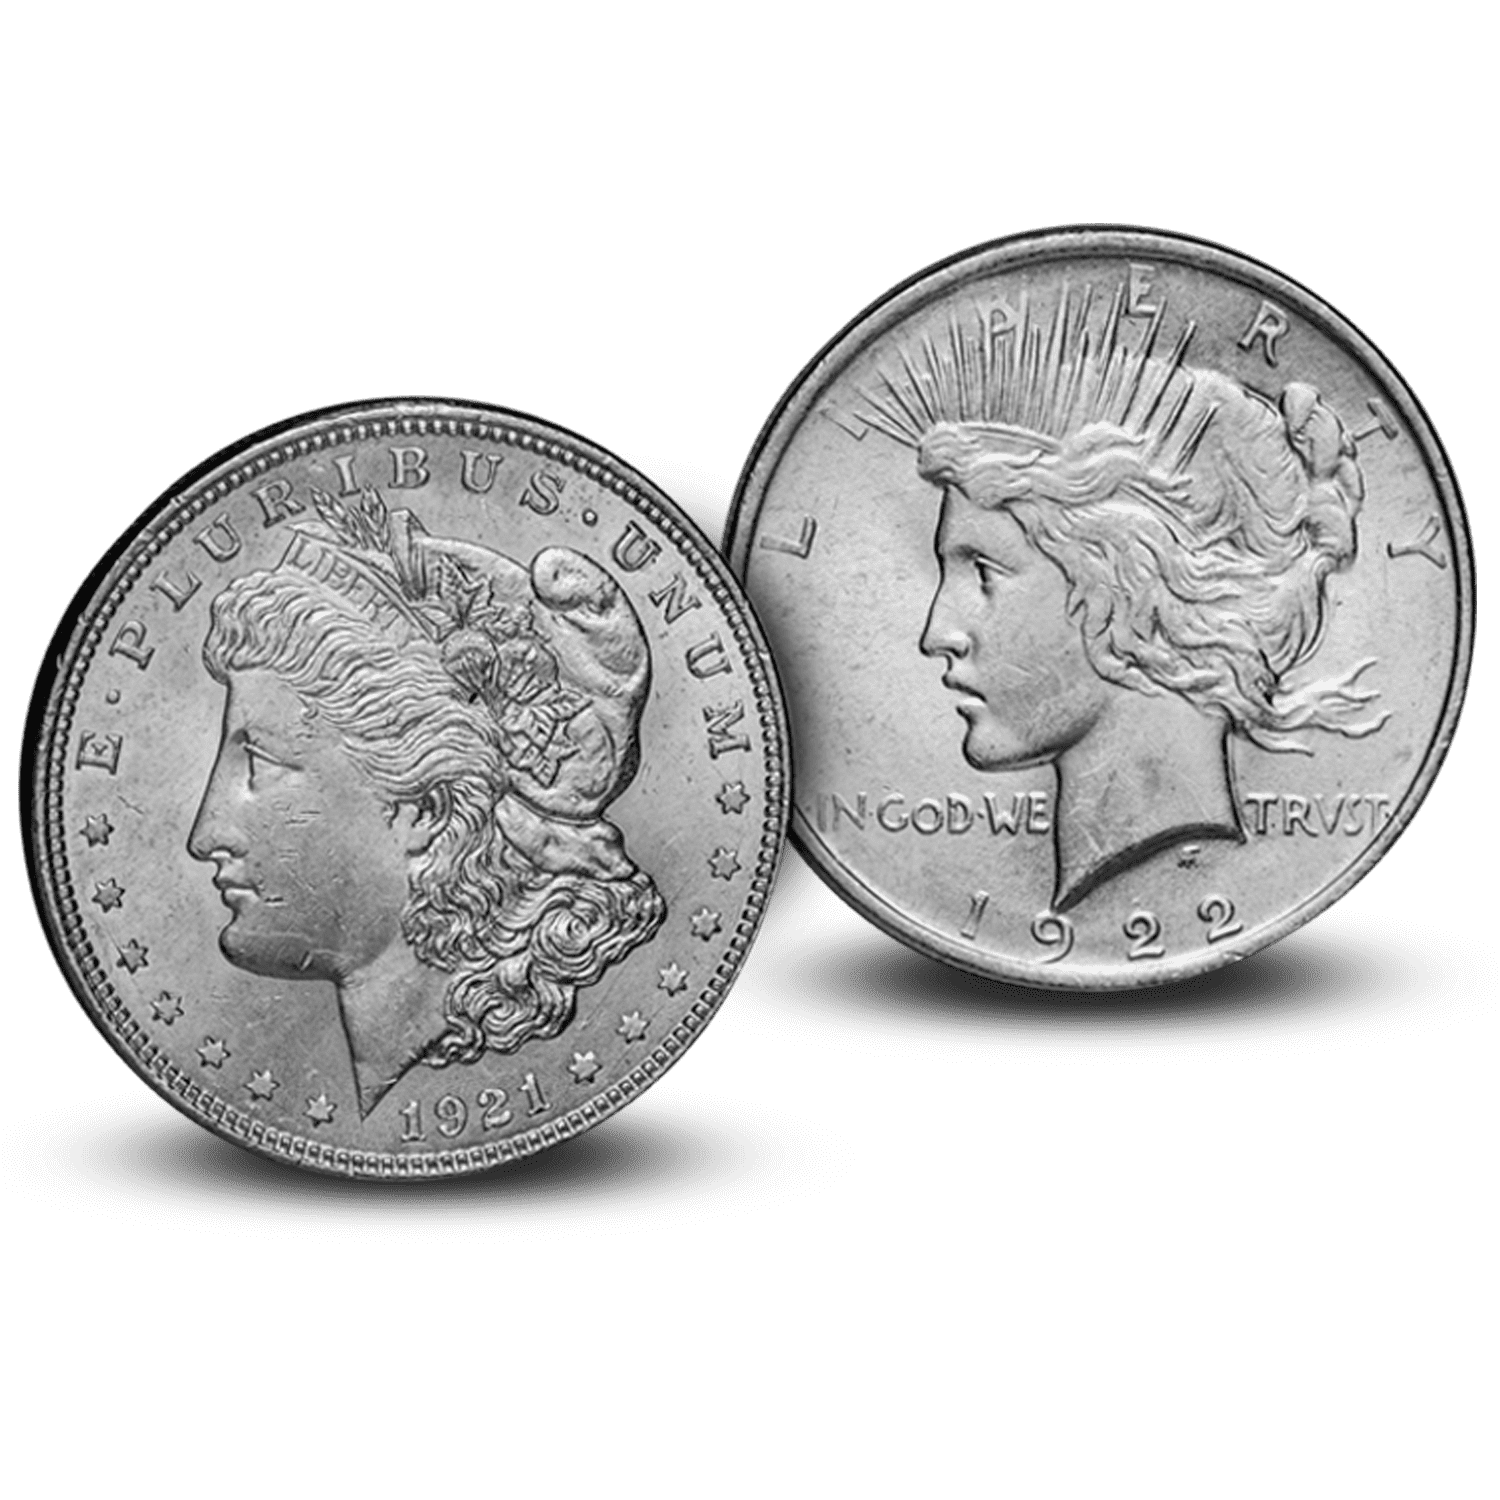 1978 Silver Dollar